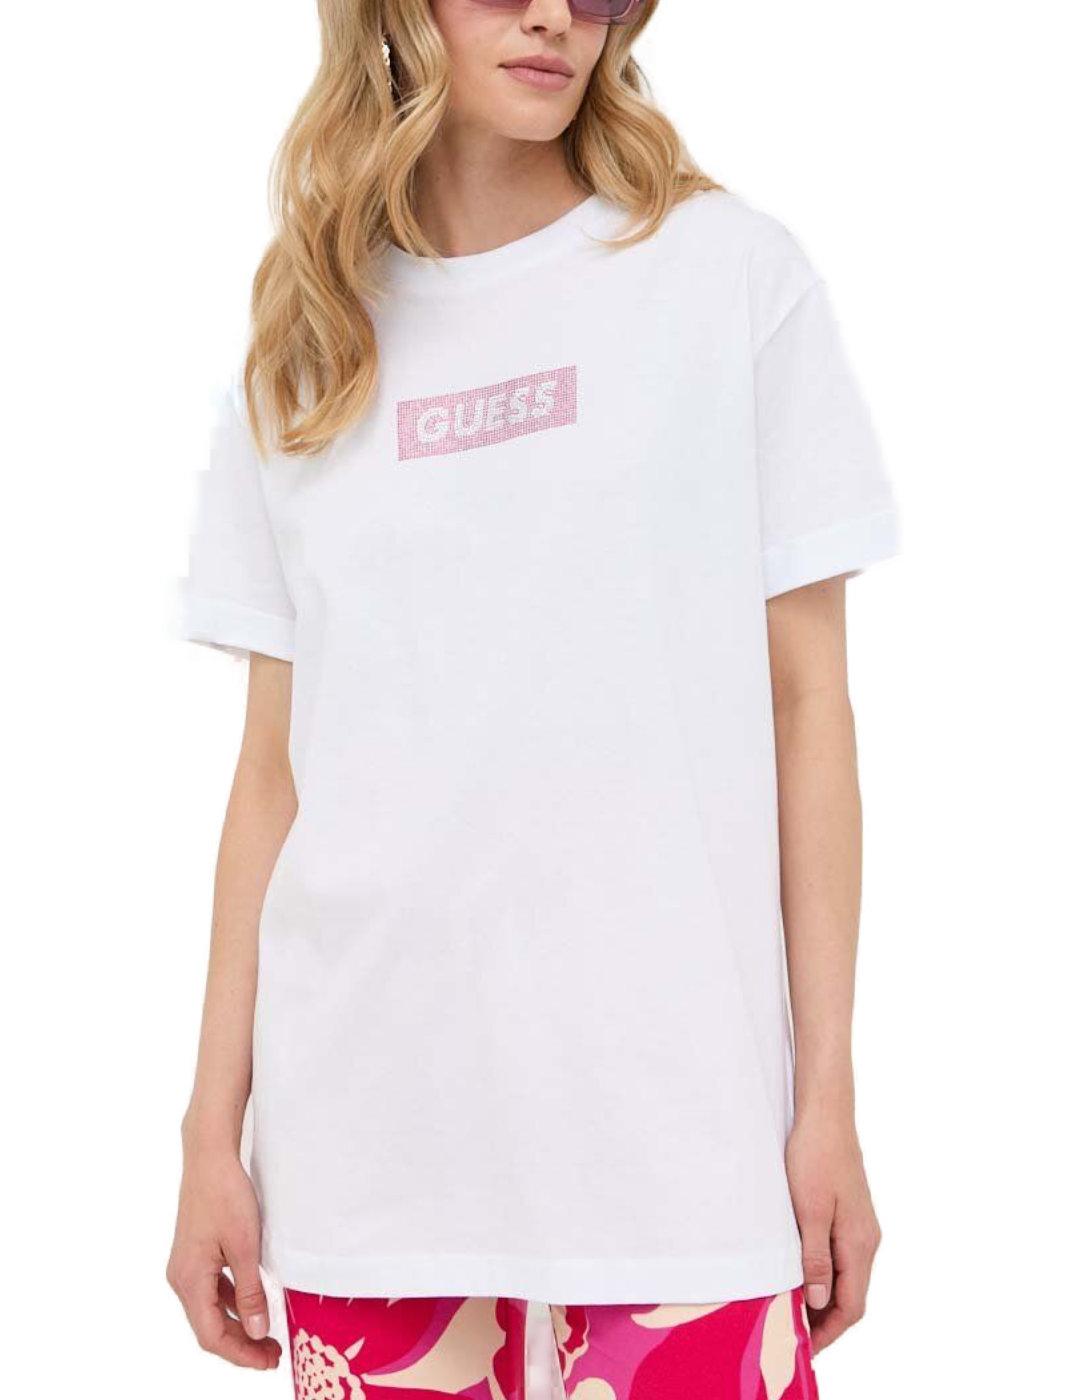 Camiseta blanca cuello pico Guess- Camiseta blanca logo mini triángulo  Guess mujer